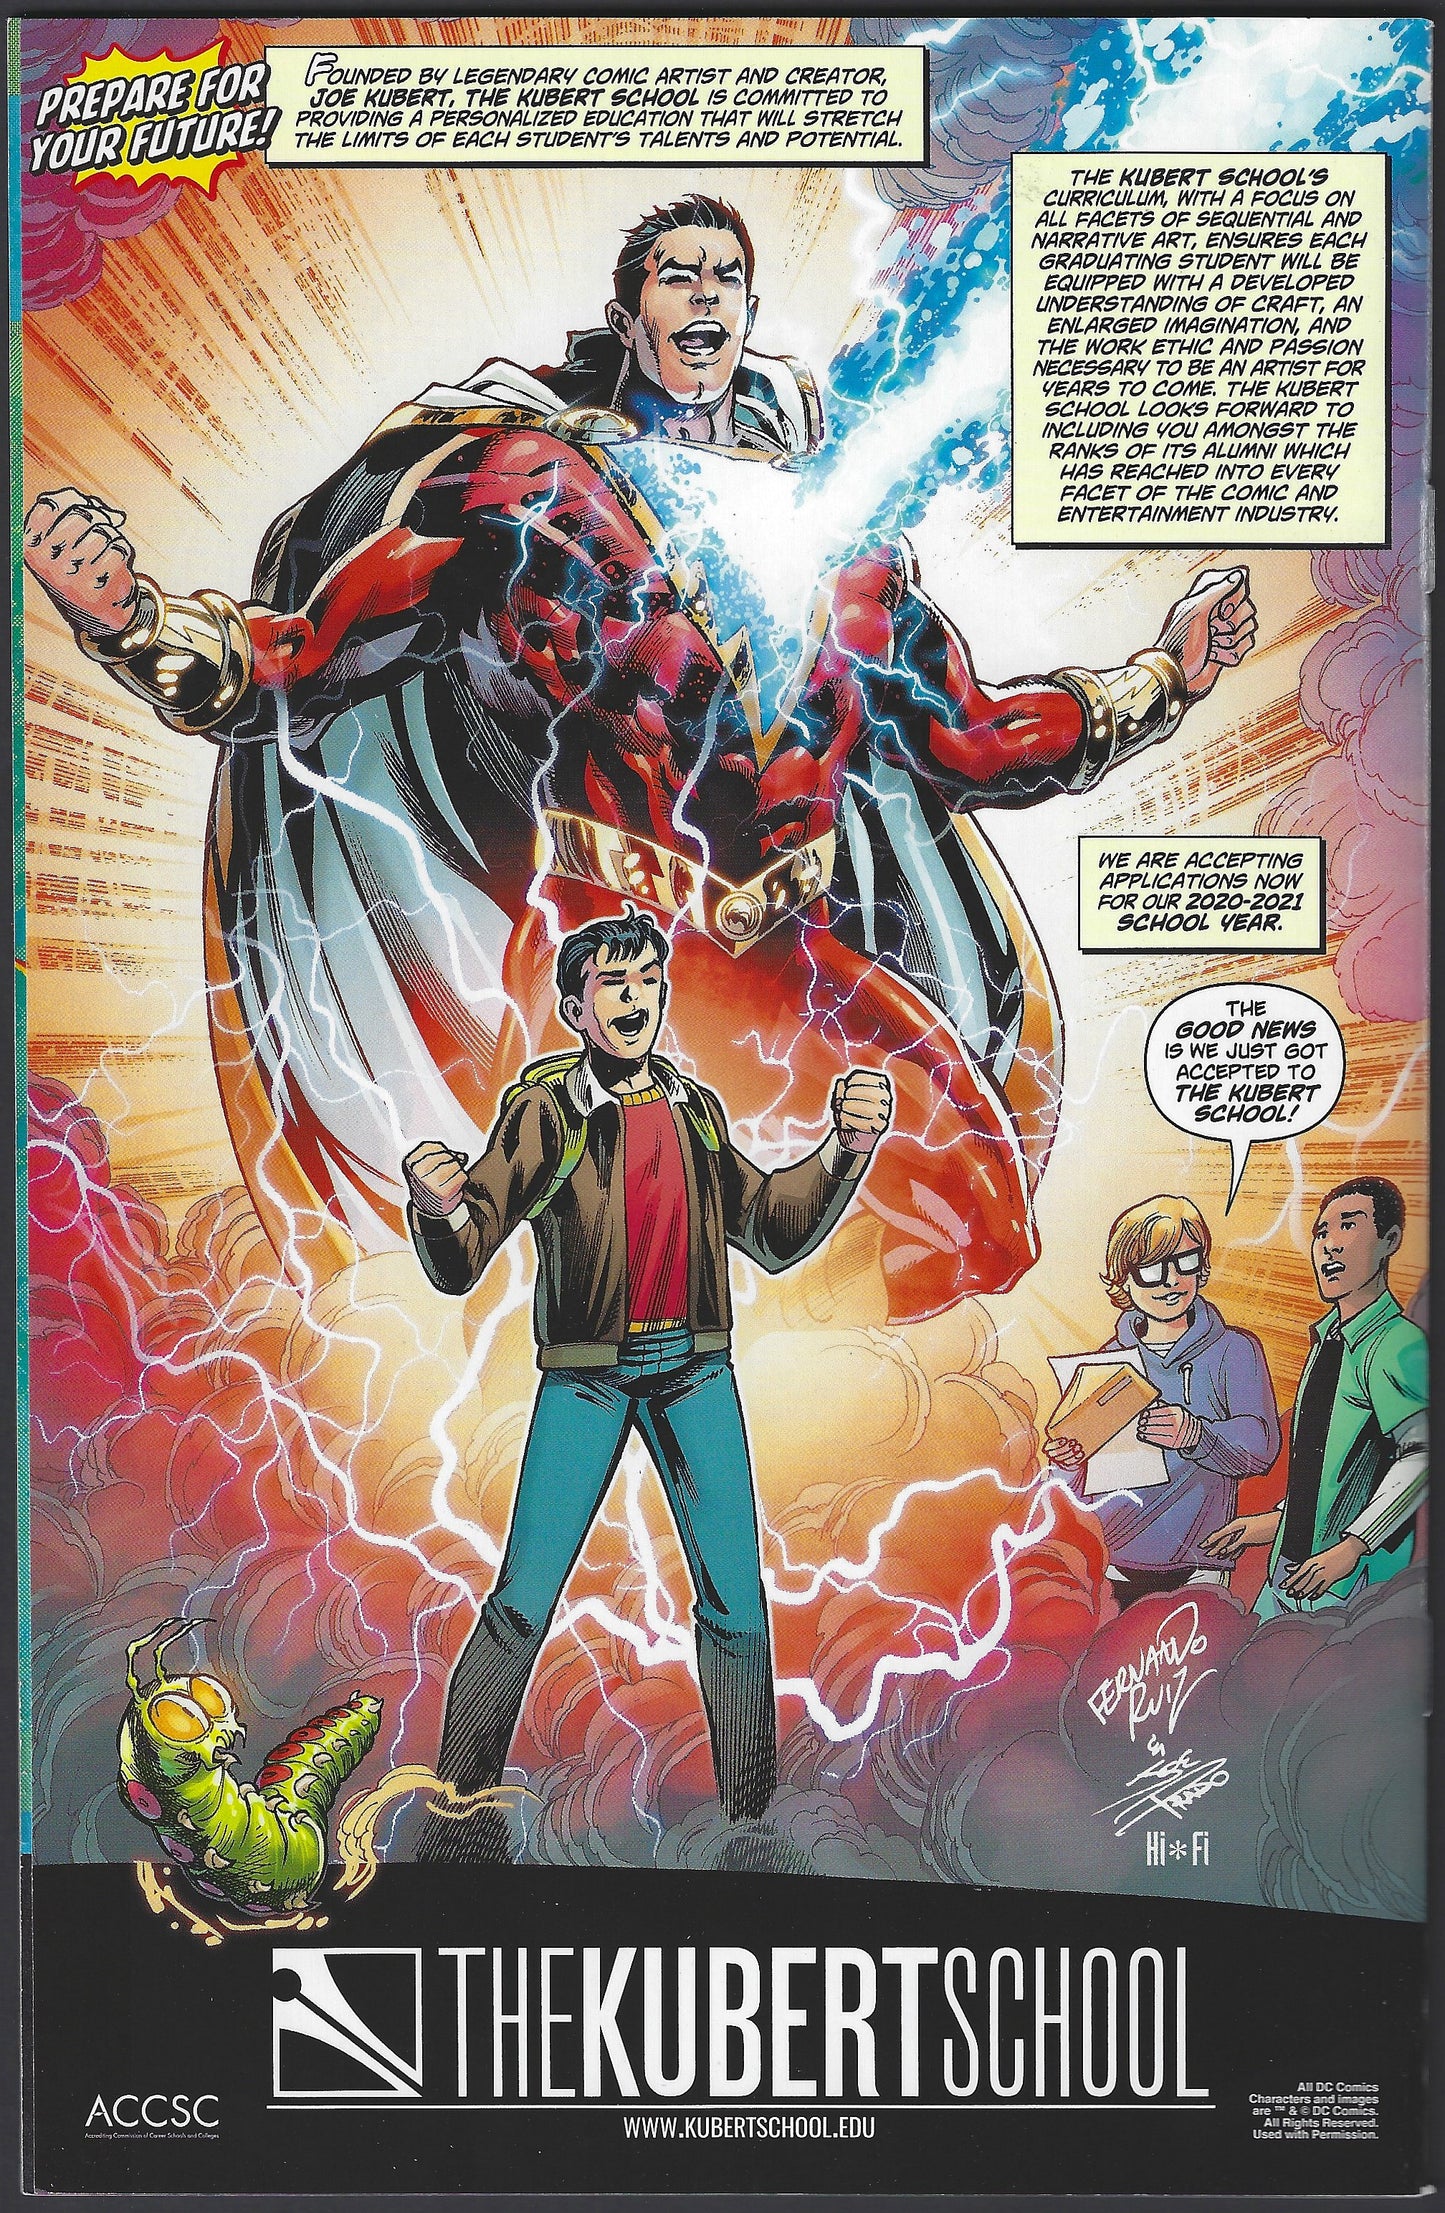 Legion of Super-Heroes 5 (2020) Variant #2